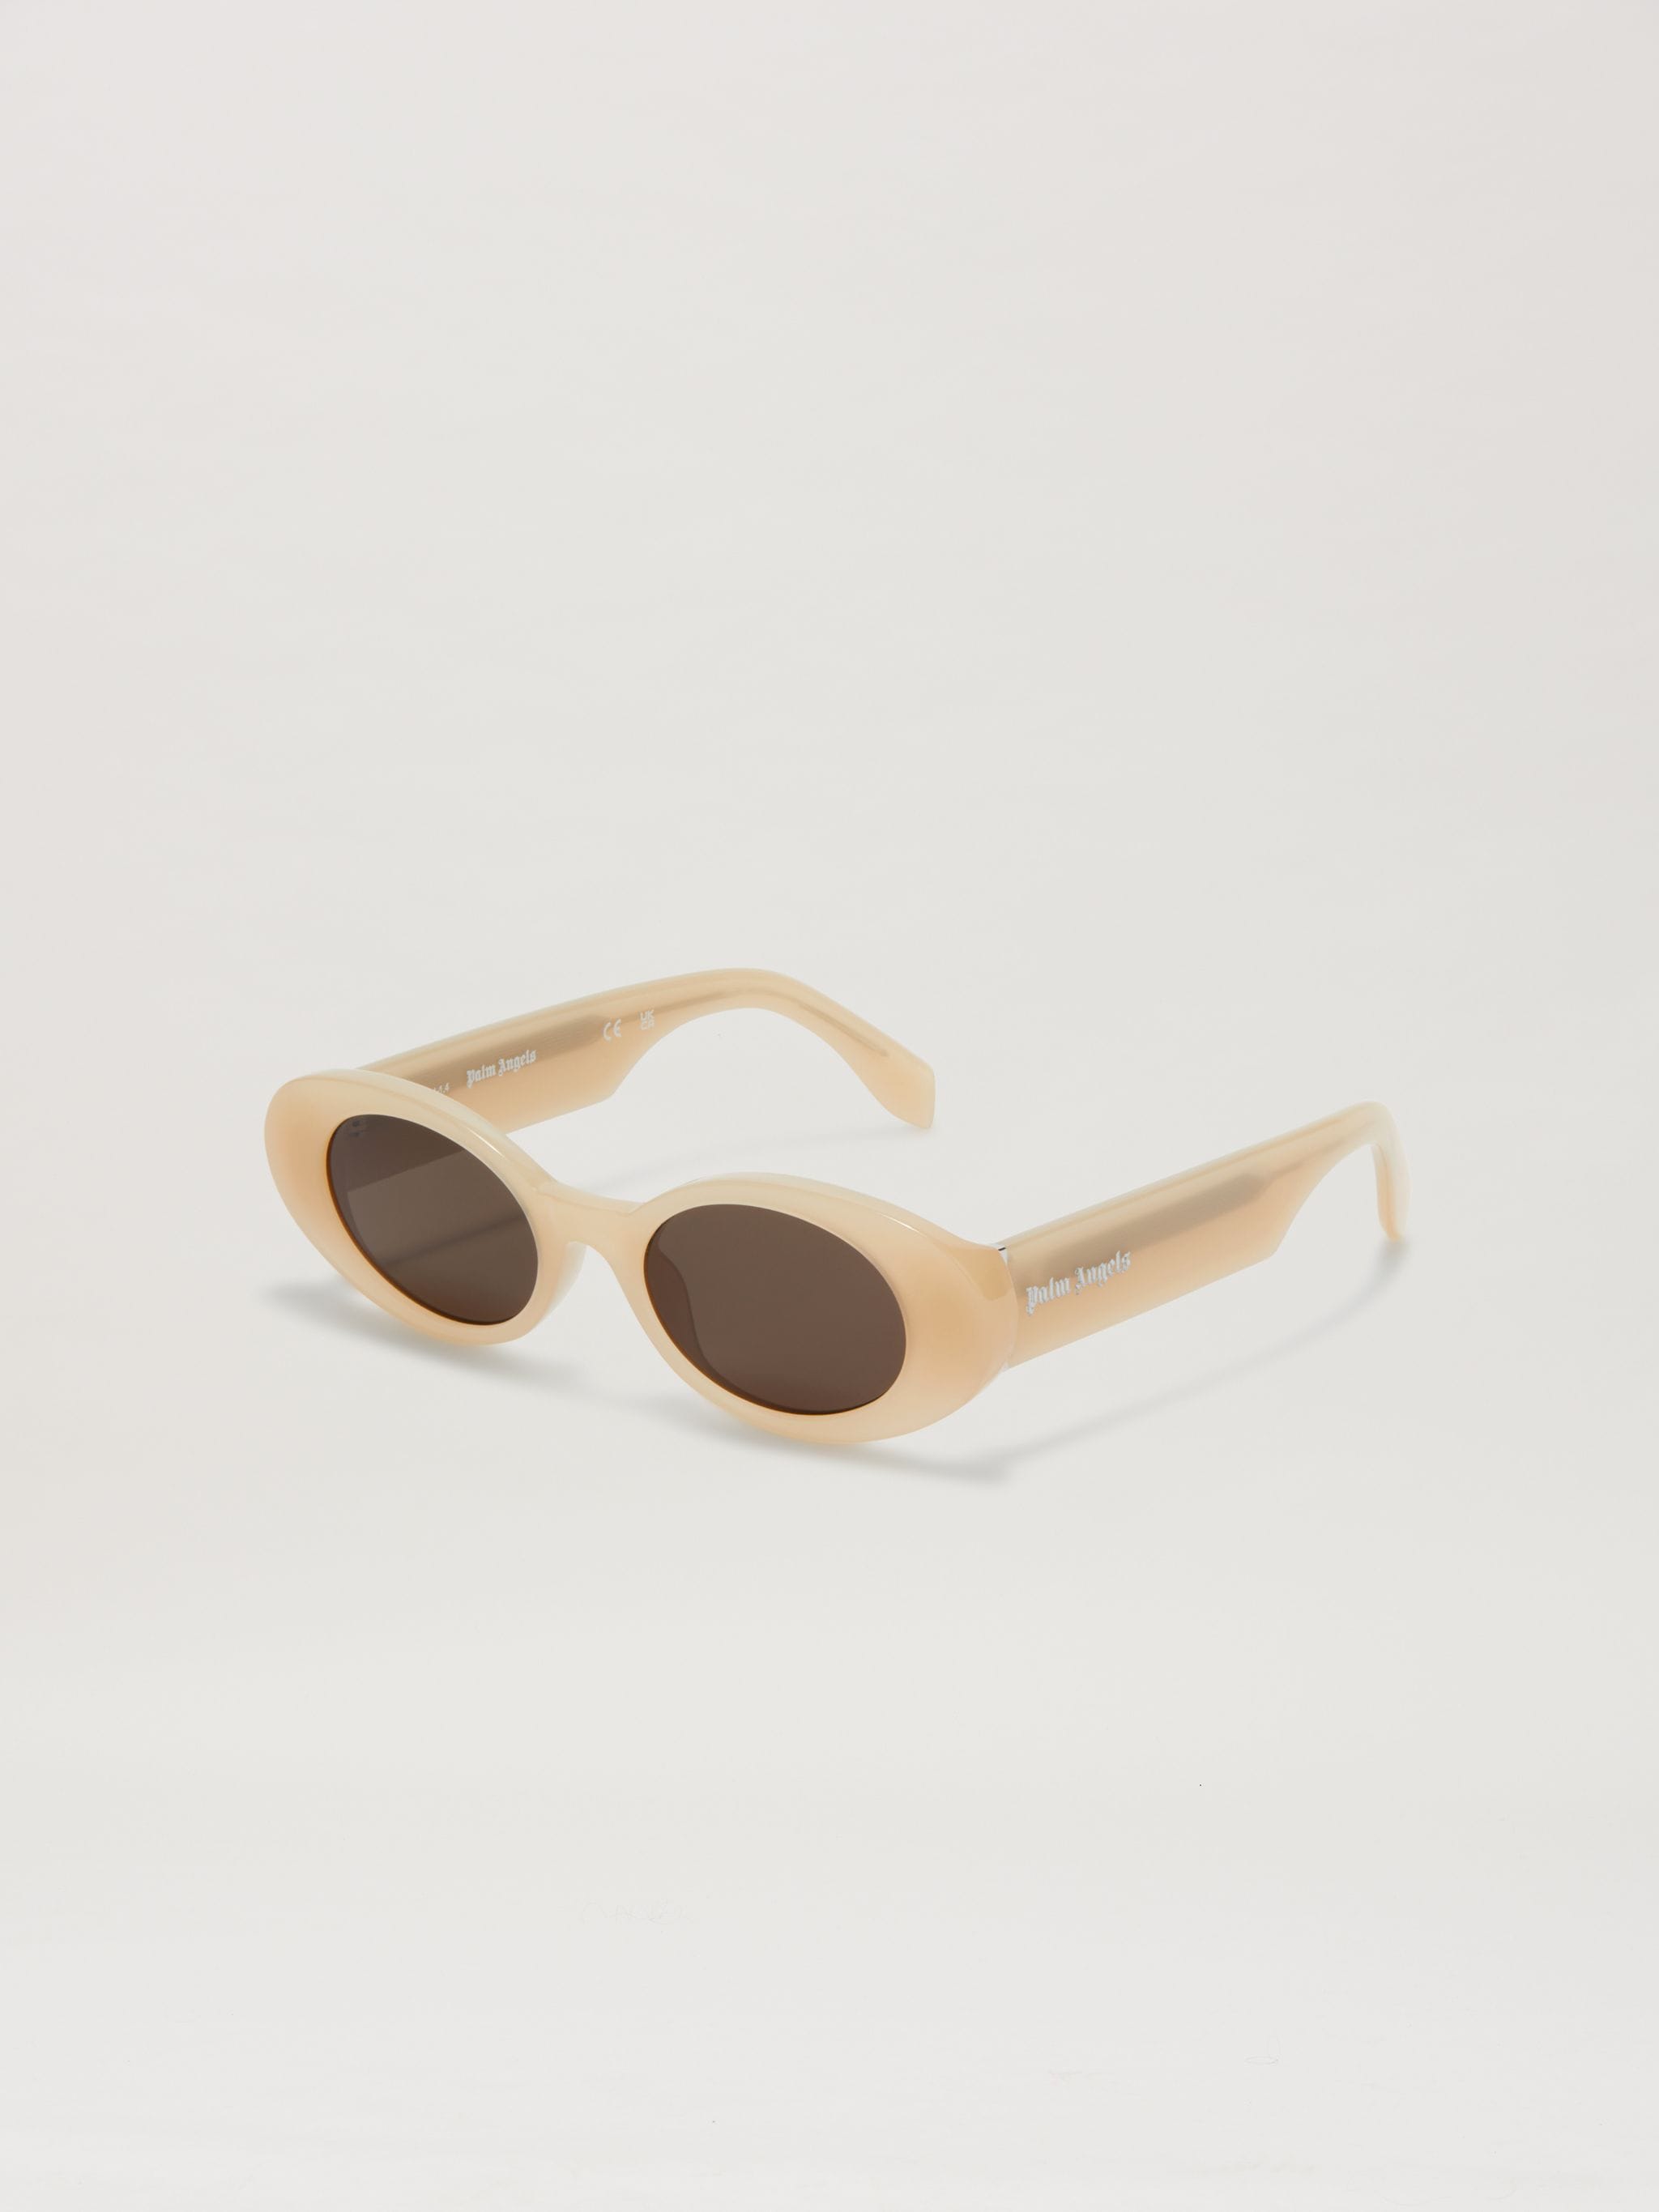 Gilroy Sunglasses